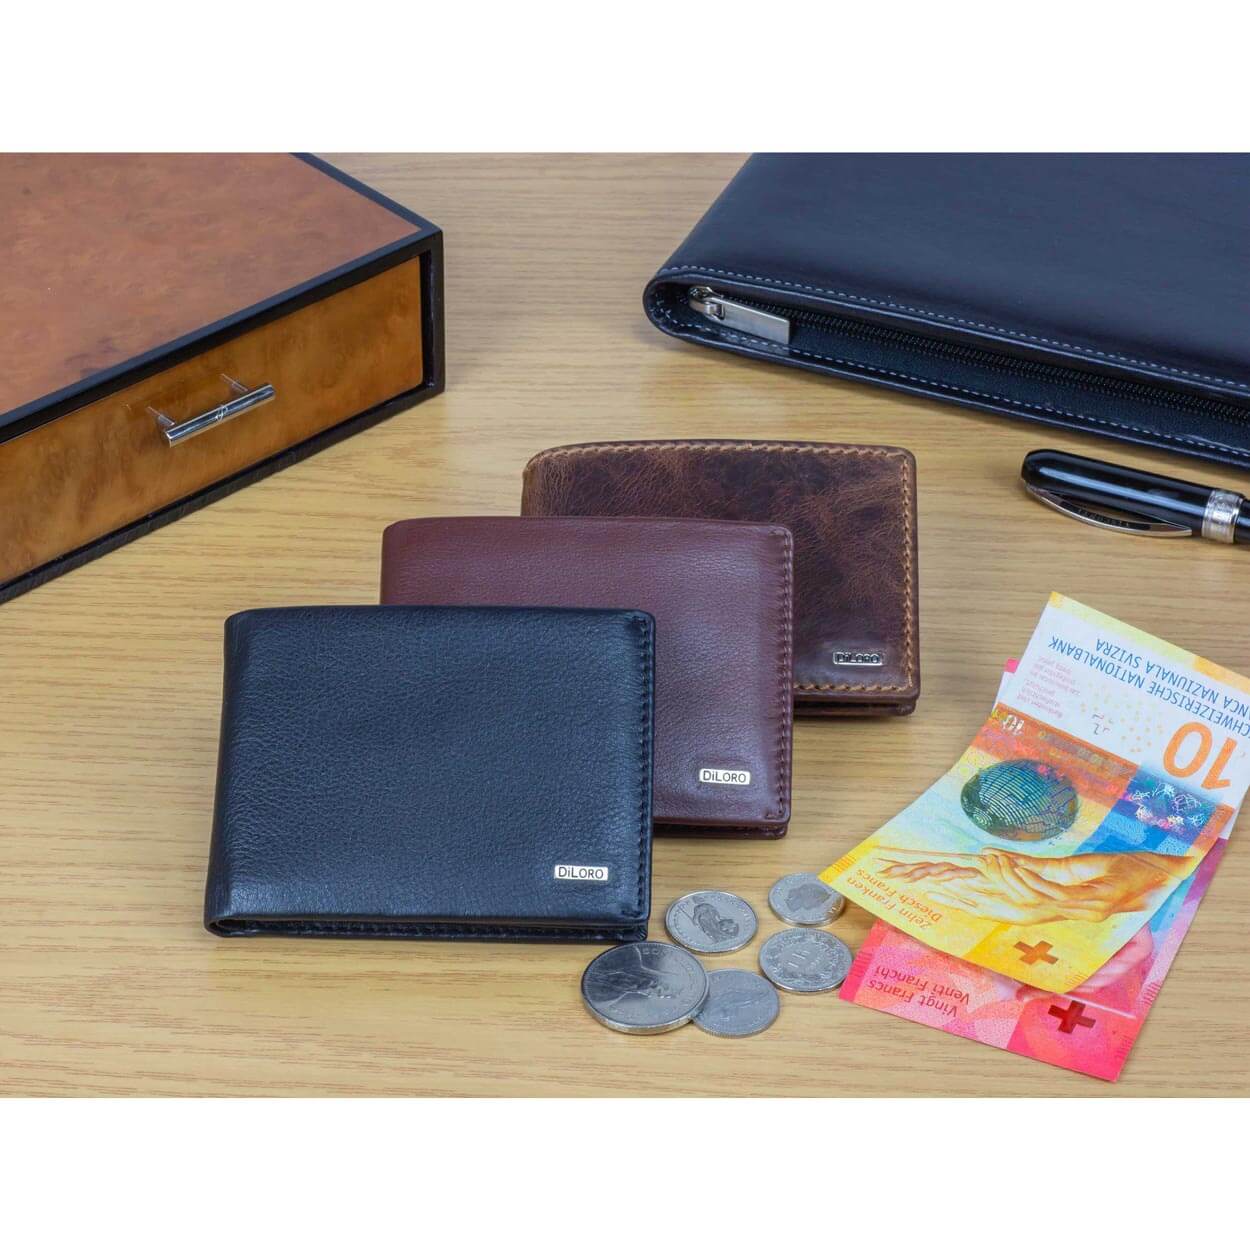 DiLoro Men's Slim Bifold Leather Wallet